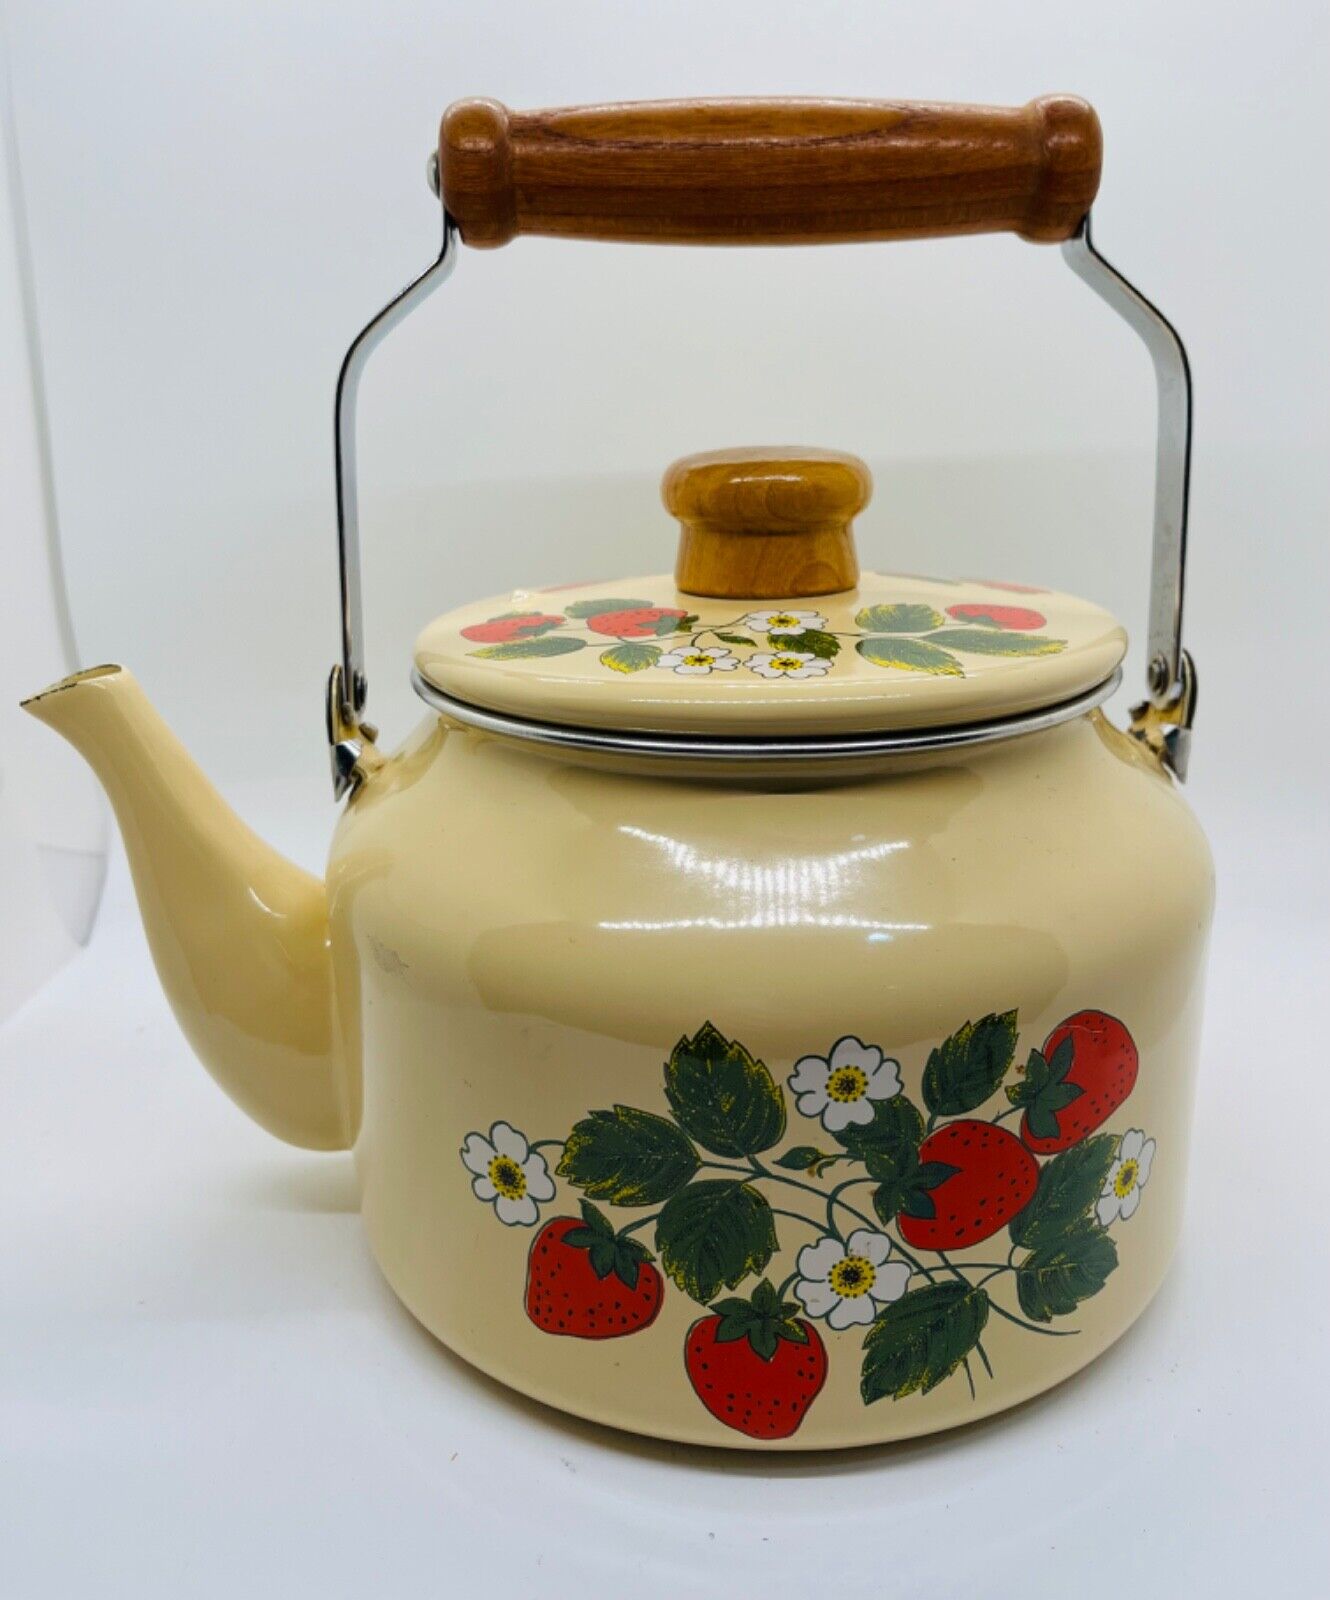 Vintage Strawberry Enamel over Metal Teapot Japan Fraise 1981 Gailstyn-Sutton